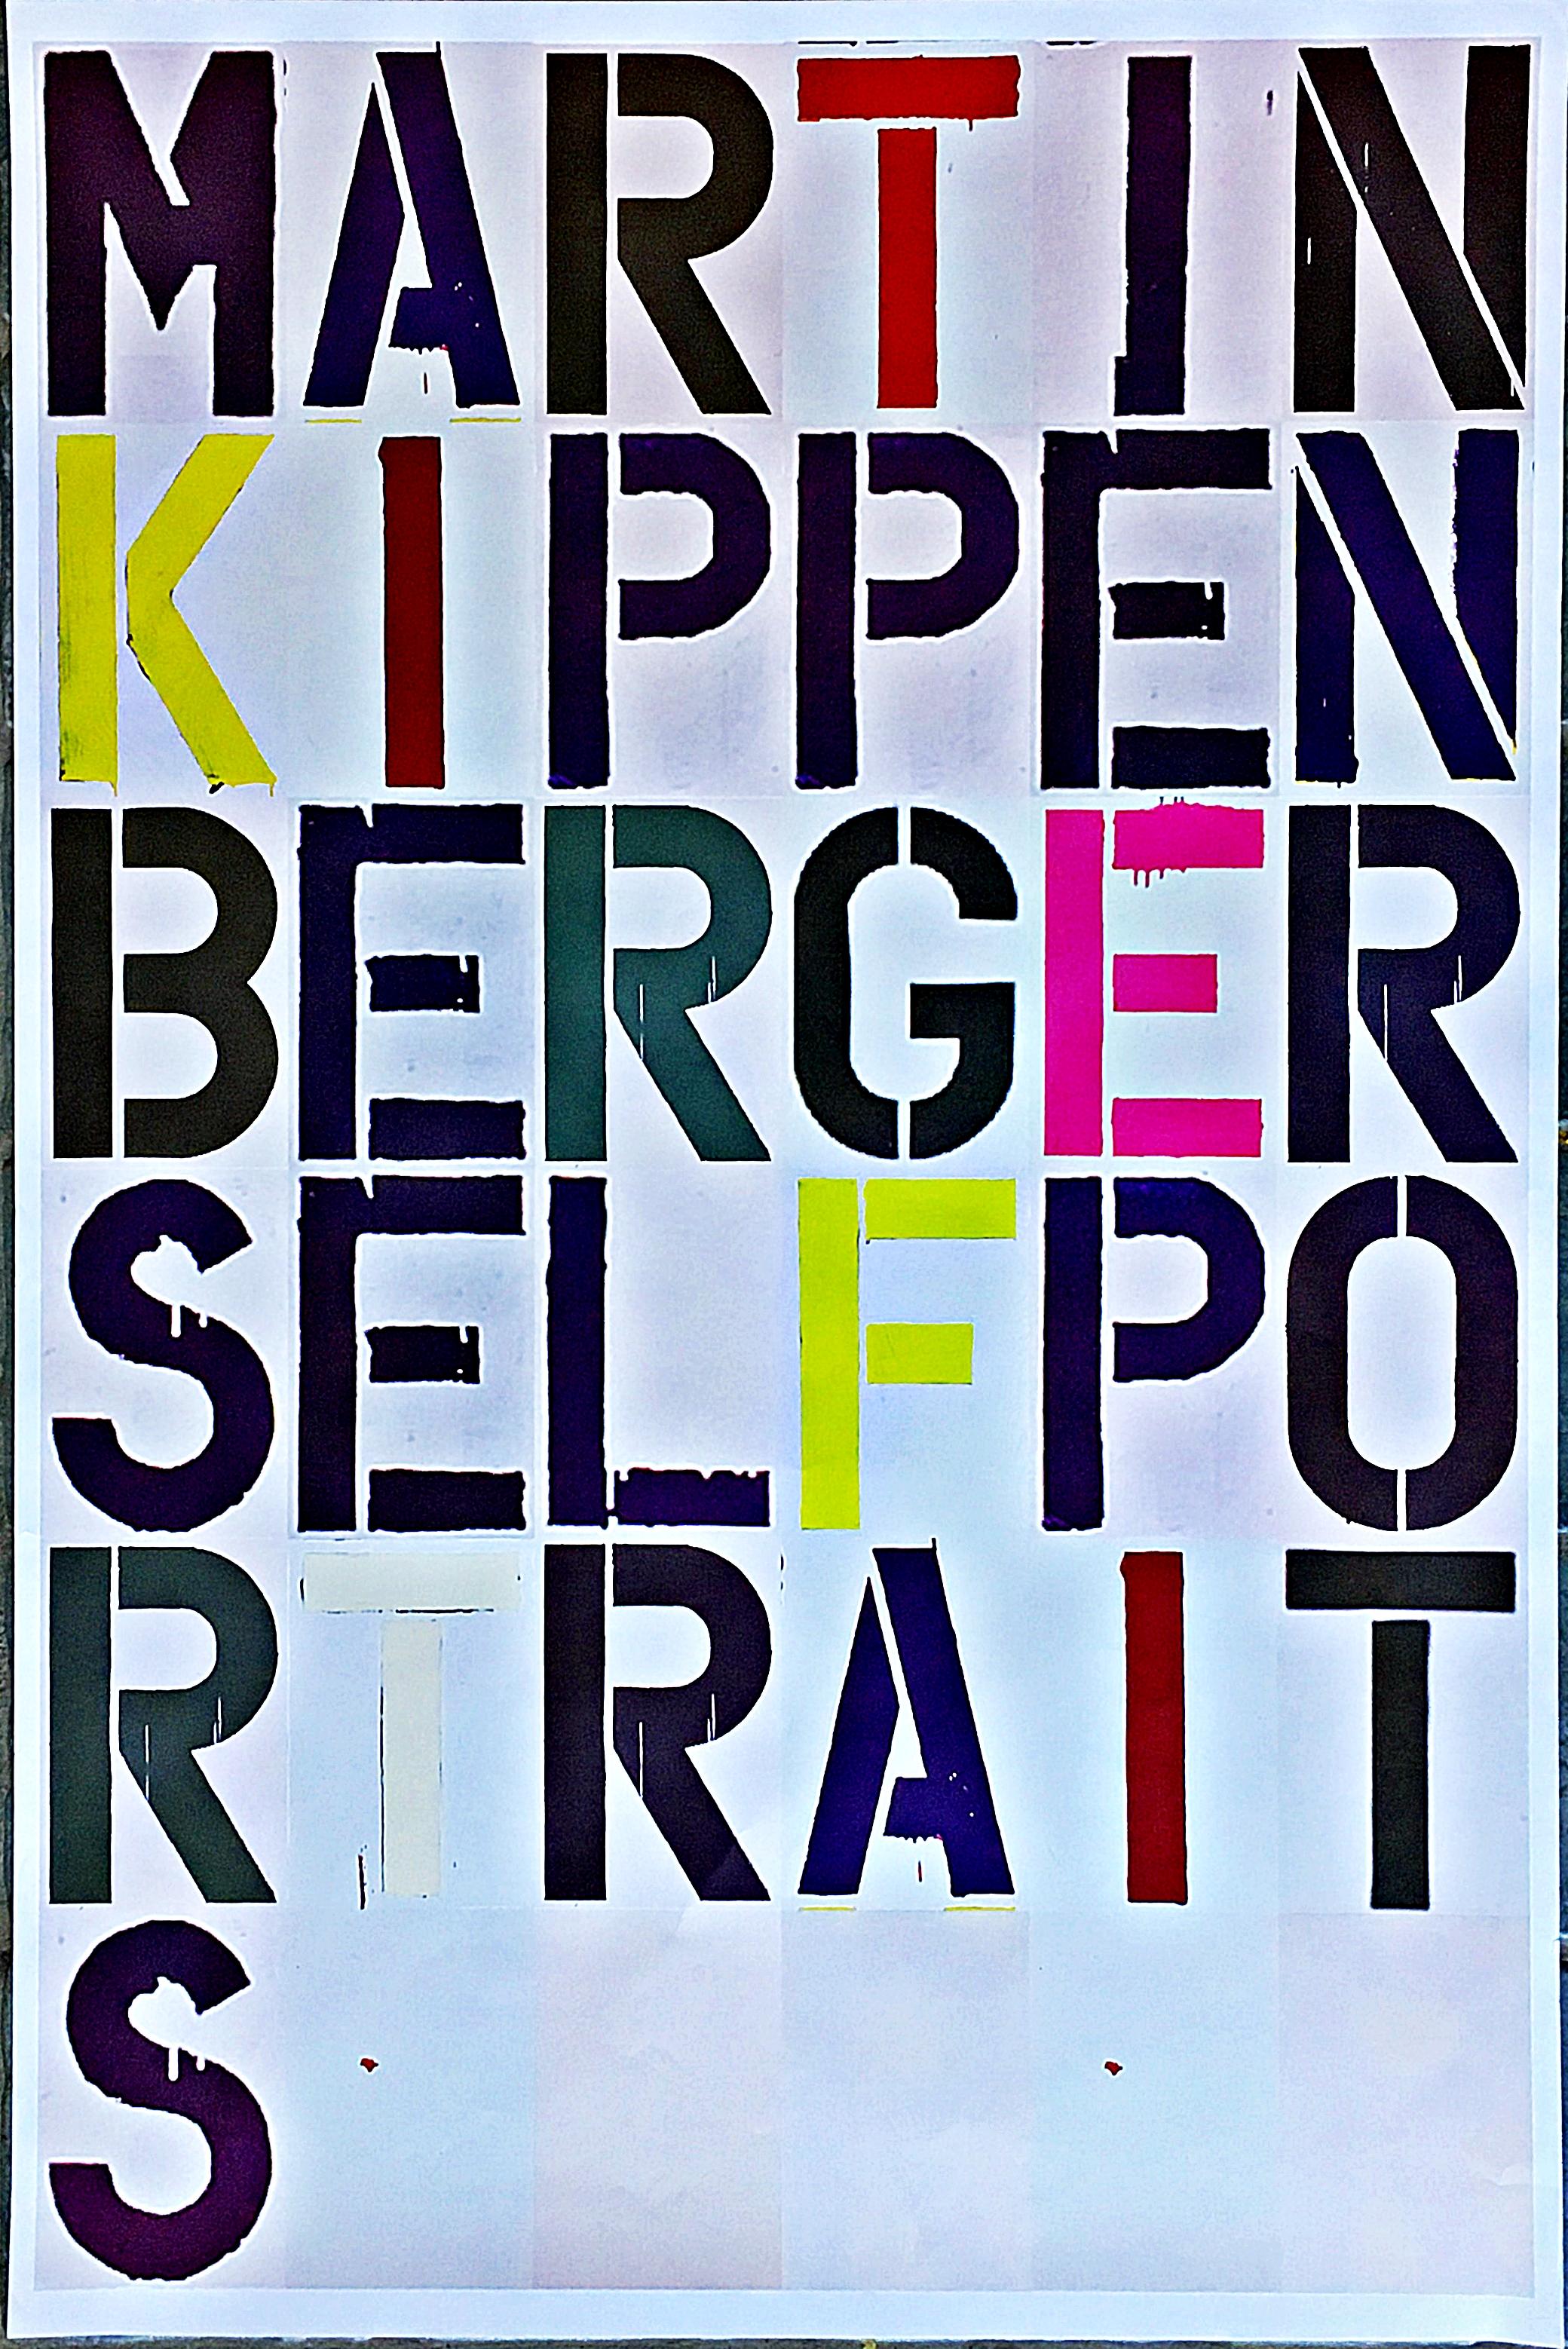 Martin Kippenberger Self-Portraits:  Minimalist poster Christopher Wool designed